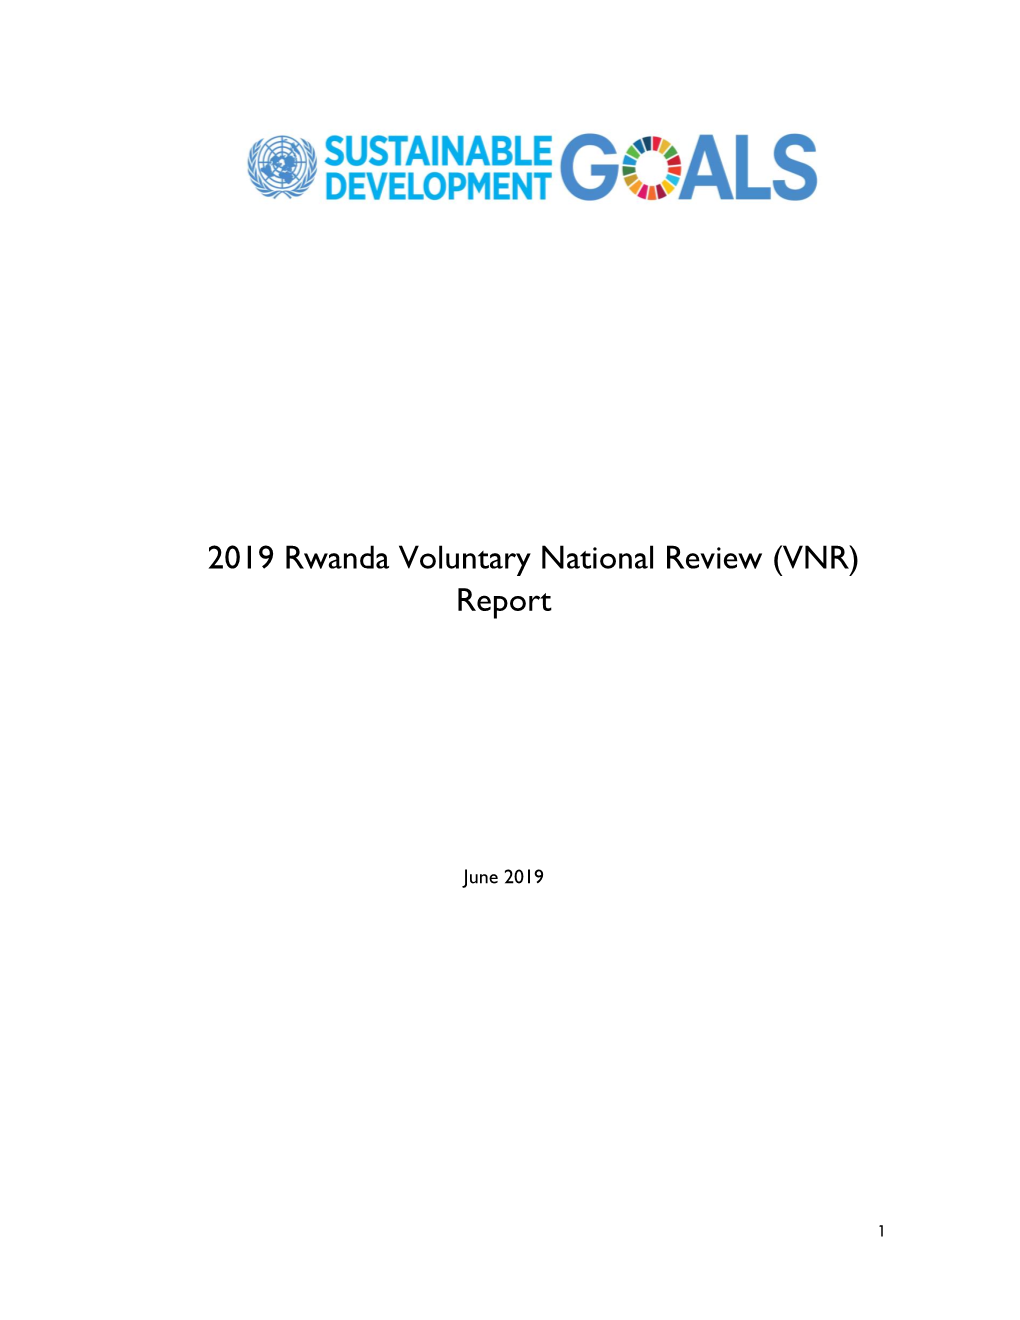 2019 Rwanda Voluntary National Review (VNR) Report